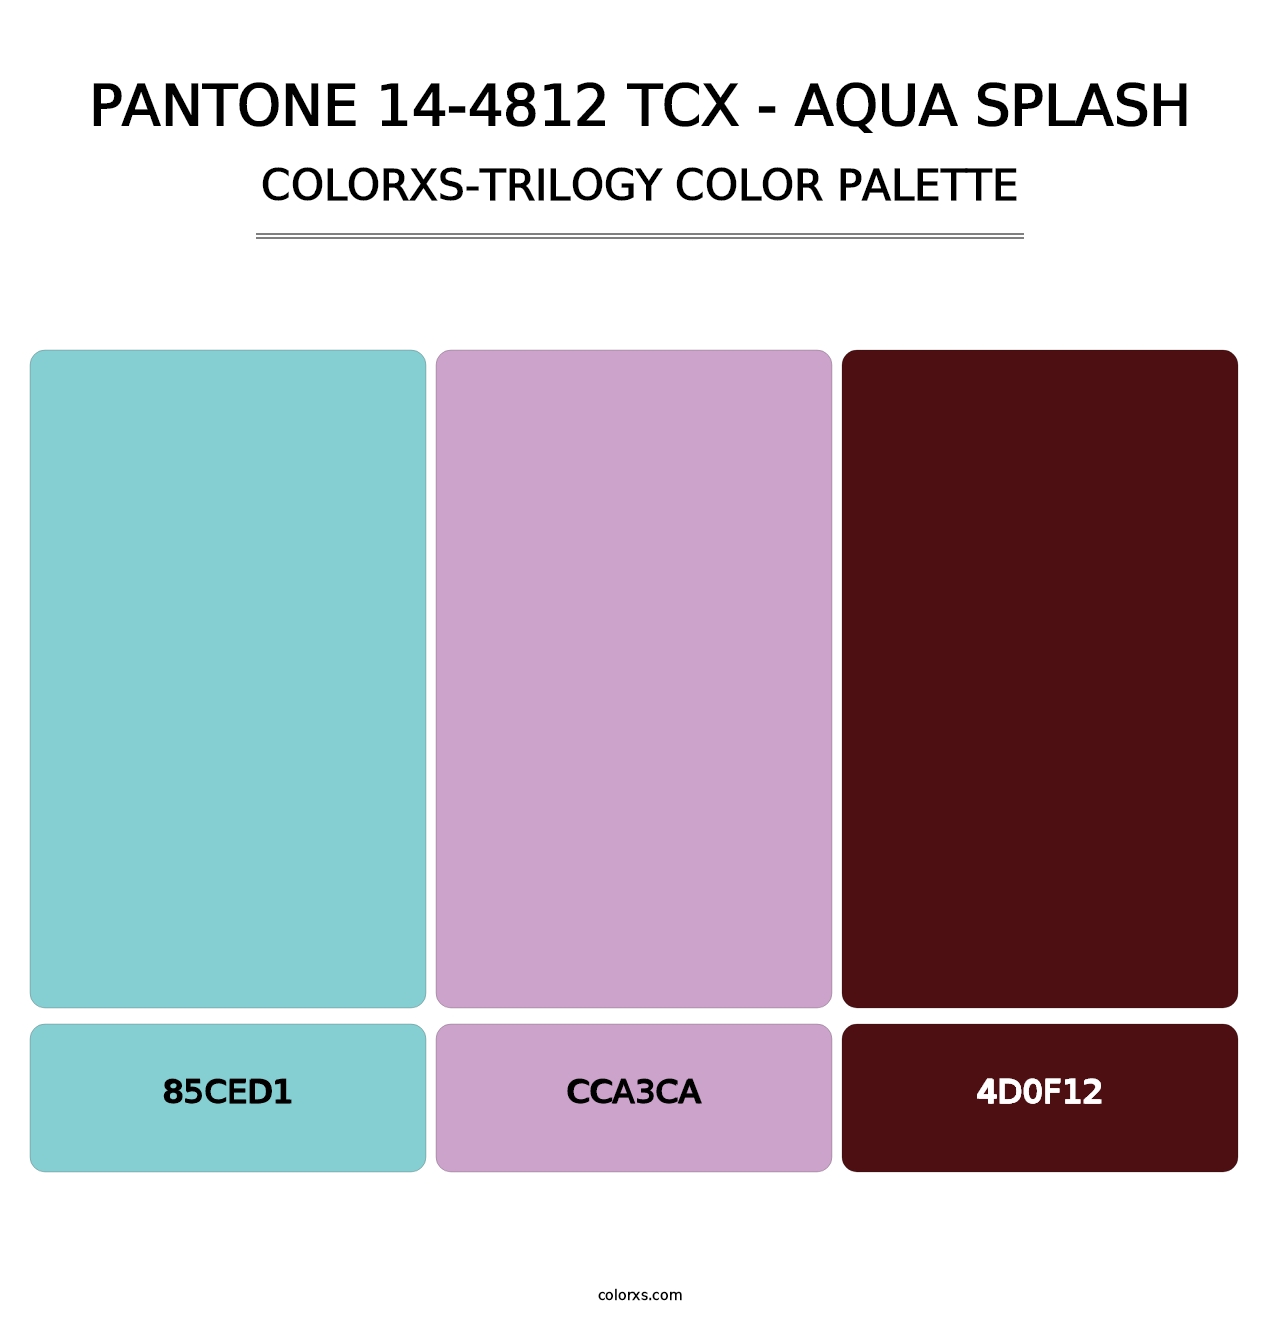 PANTONE 14-4812 TCX - Aqua Splash - Colorxs Trilogy Palette